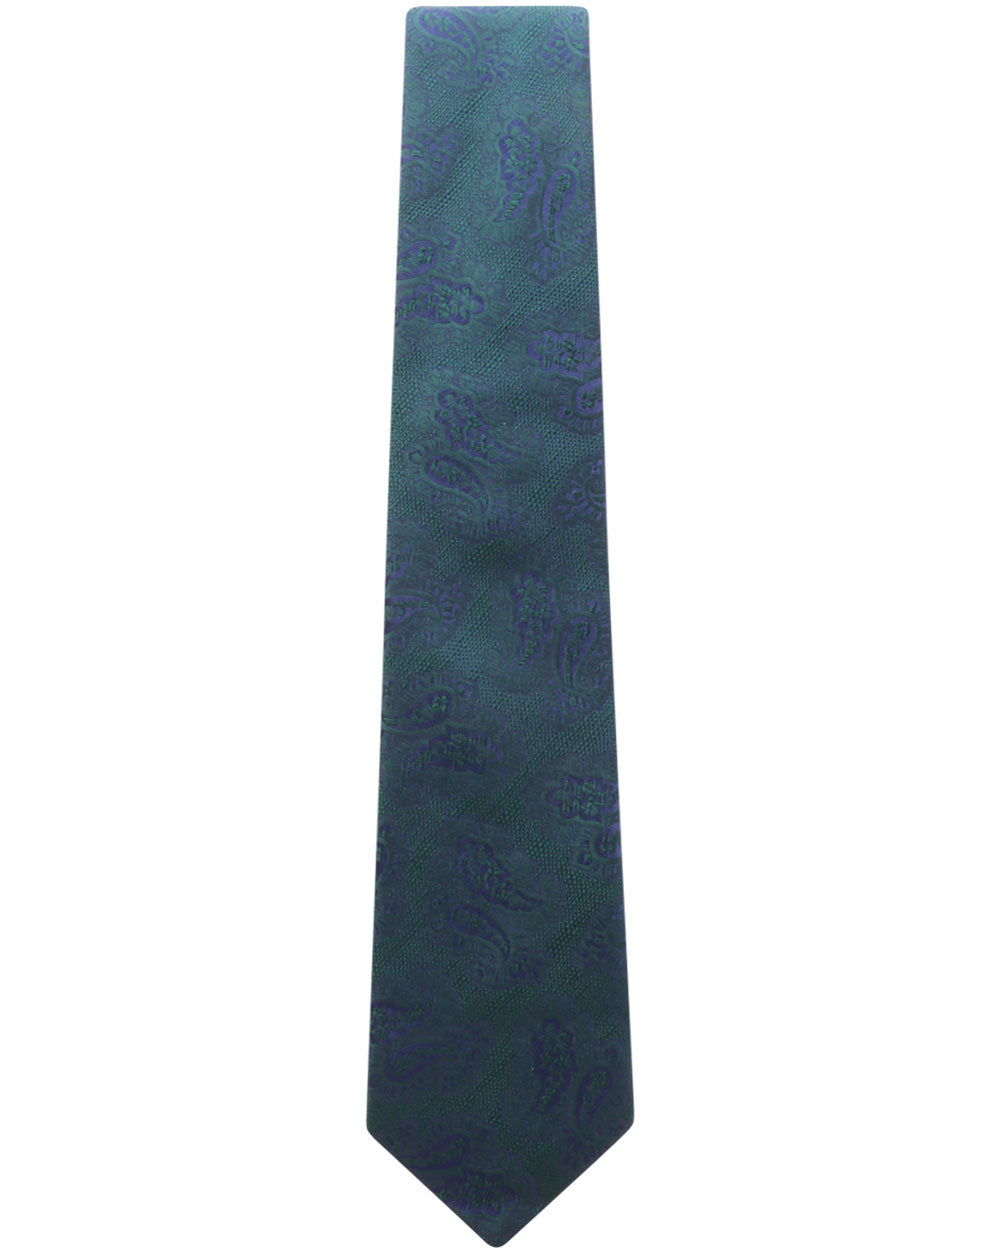 Green and Navy Tonal Paisley Silk Tie